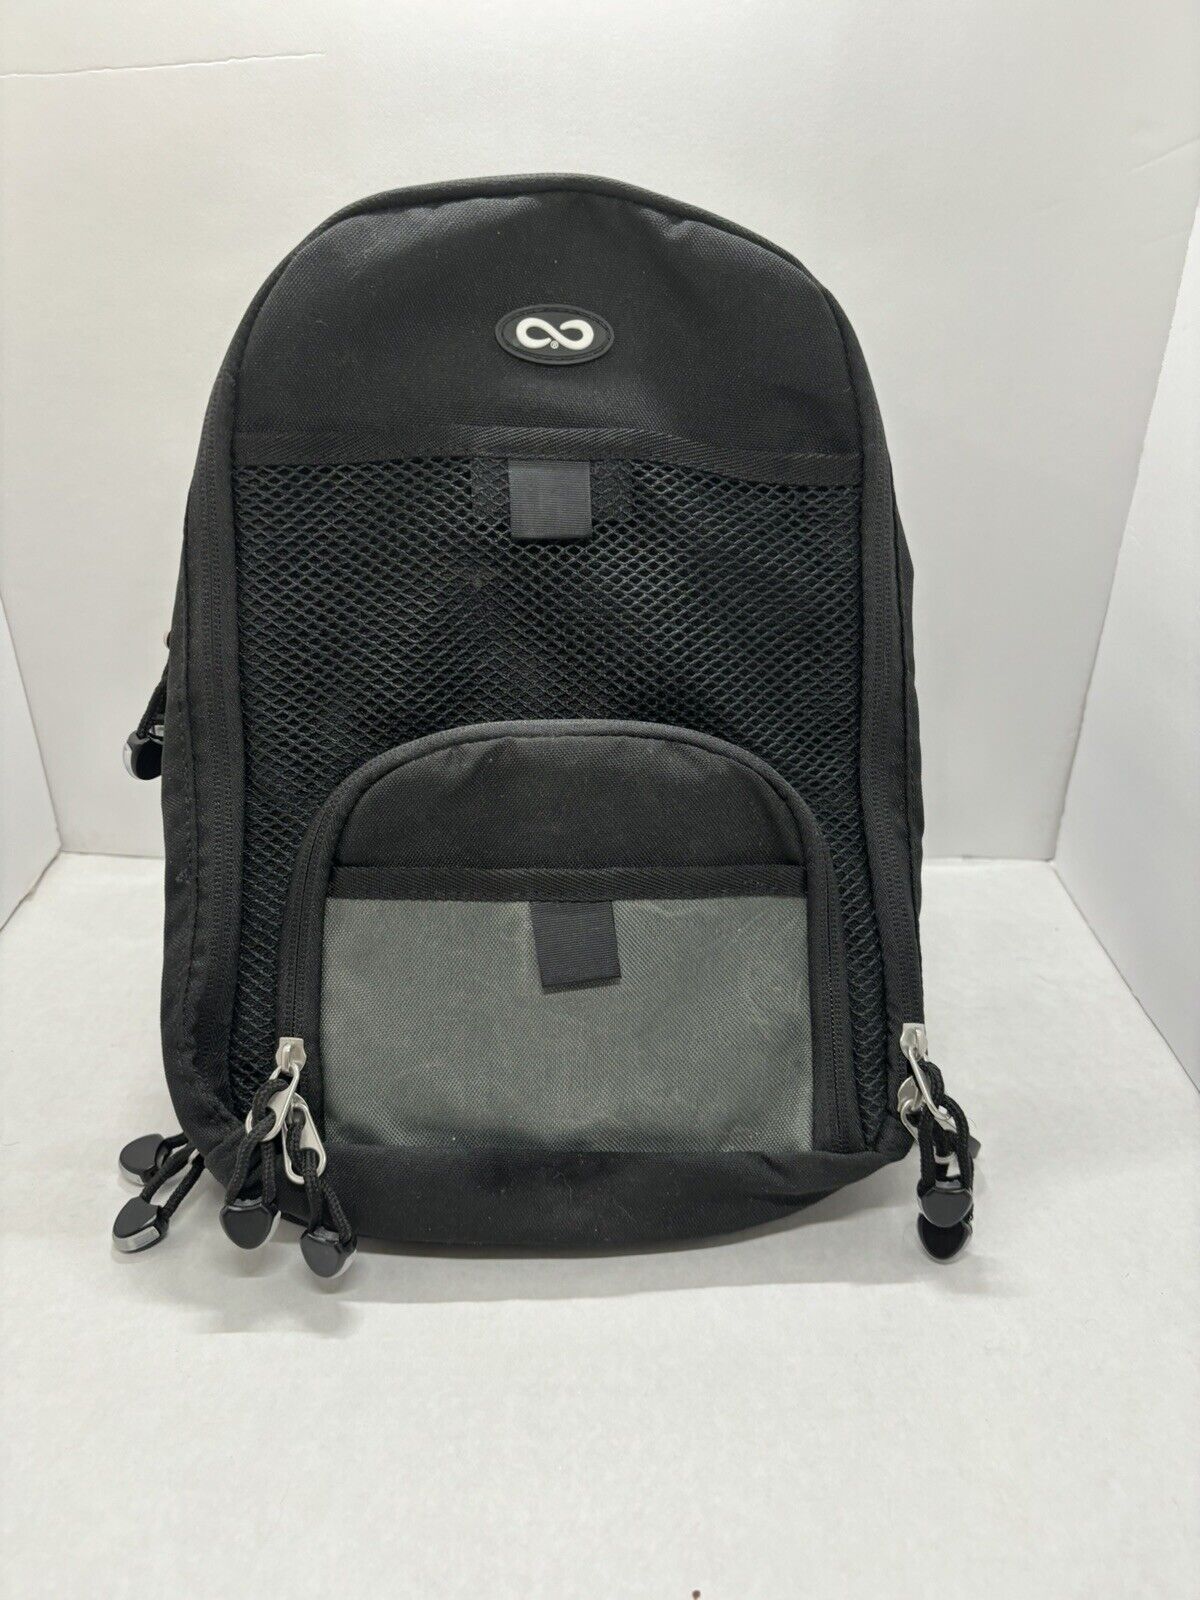 Moog Medical  Backpack 13”X 10” Black And Gray New Quality Backpack L@@K